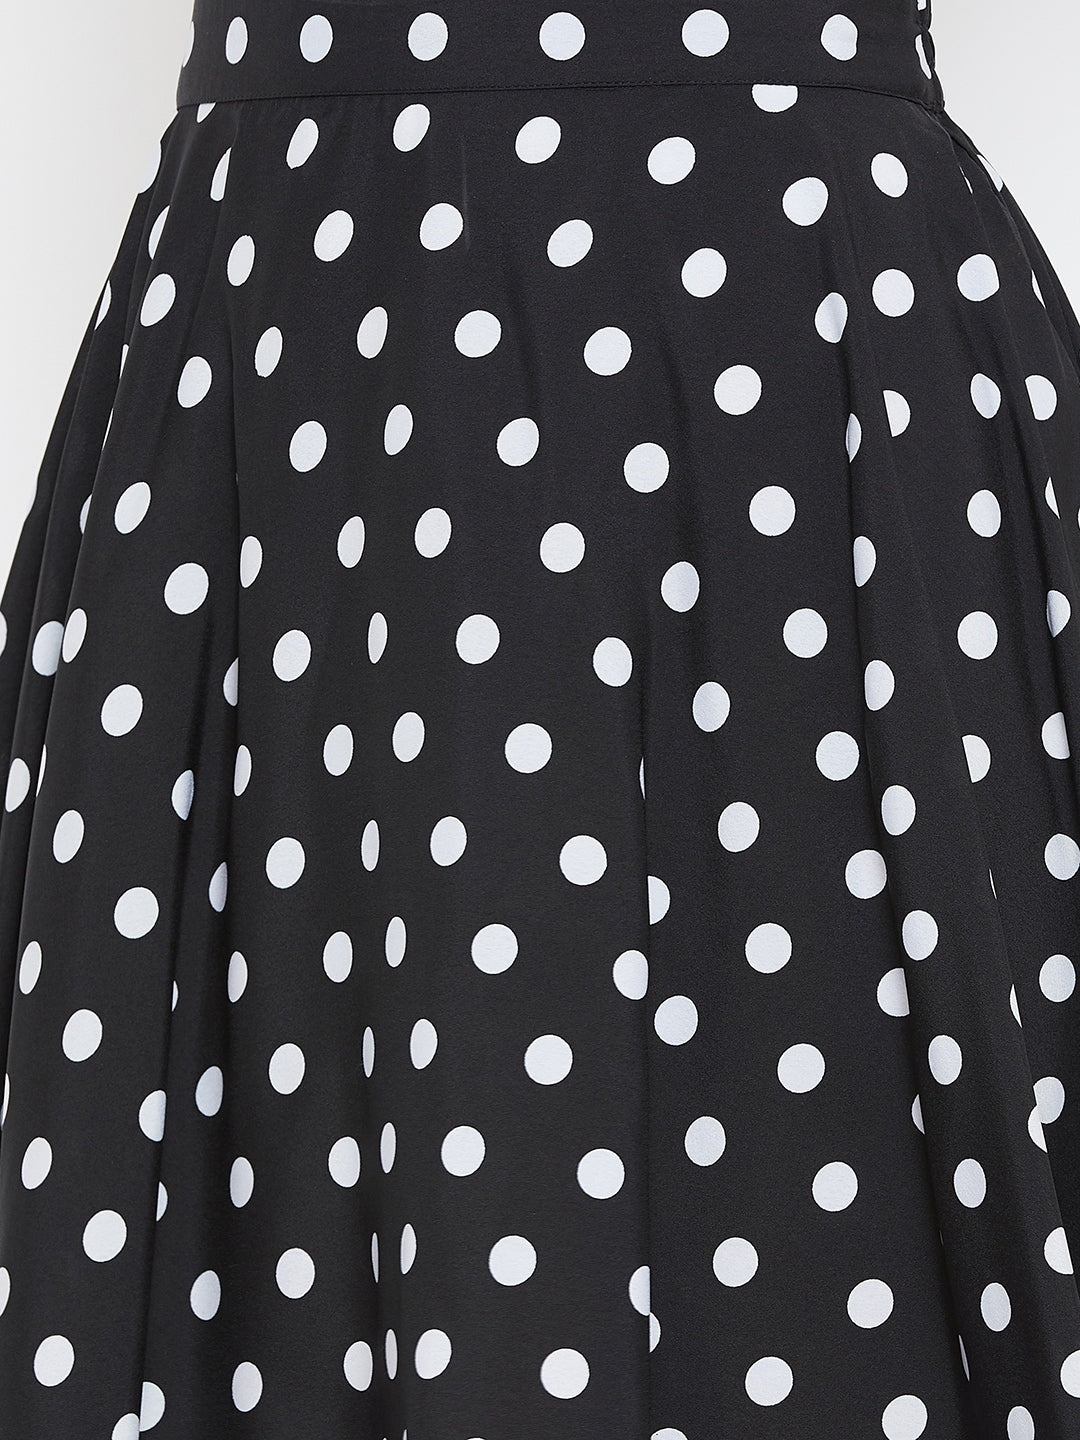 Folk Republic Women Black & White Polka Dot Printed Elastic Waist Flared Mini Skirt - #folk republic#